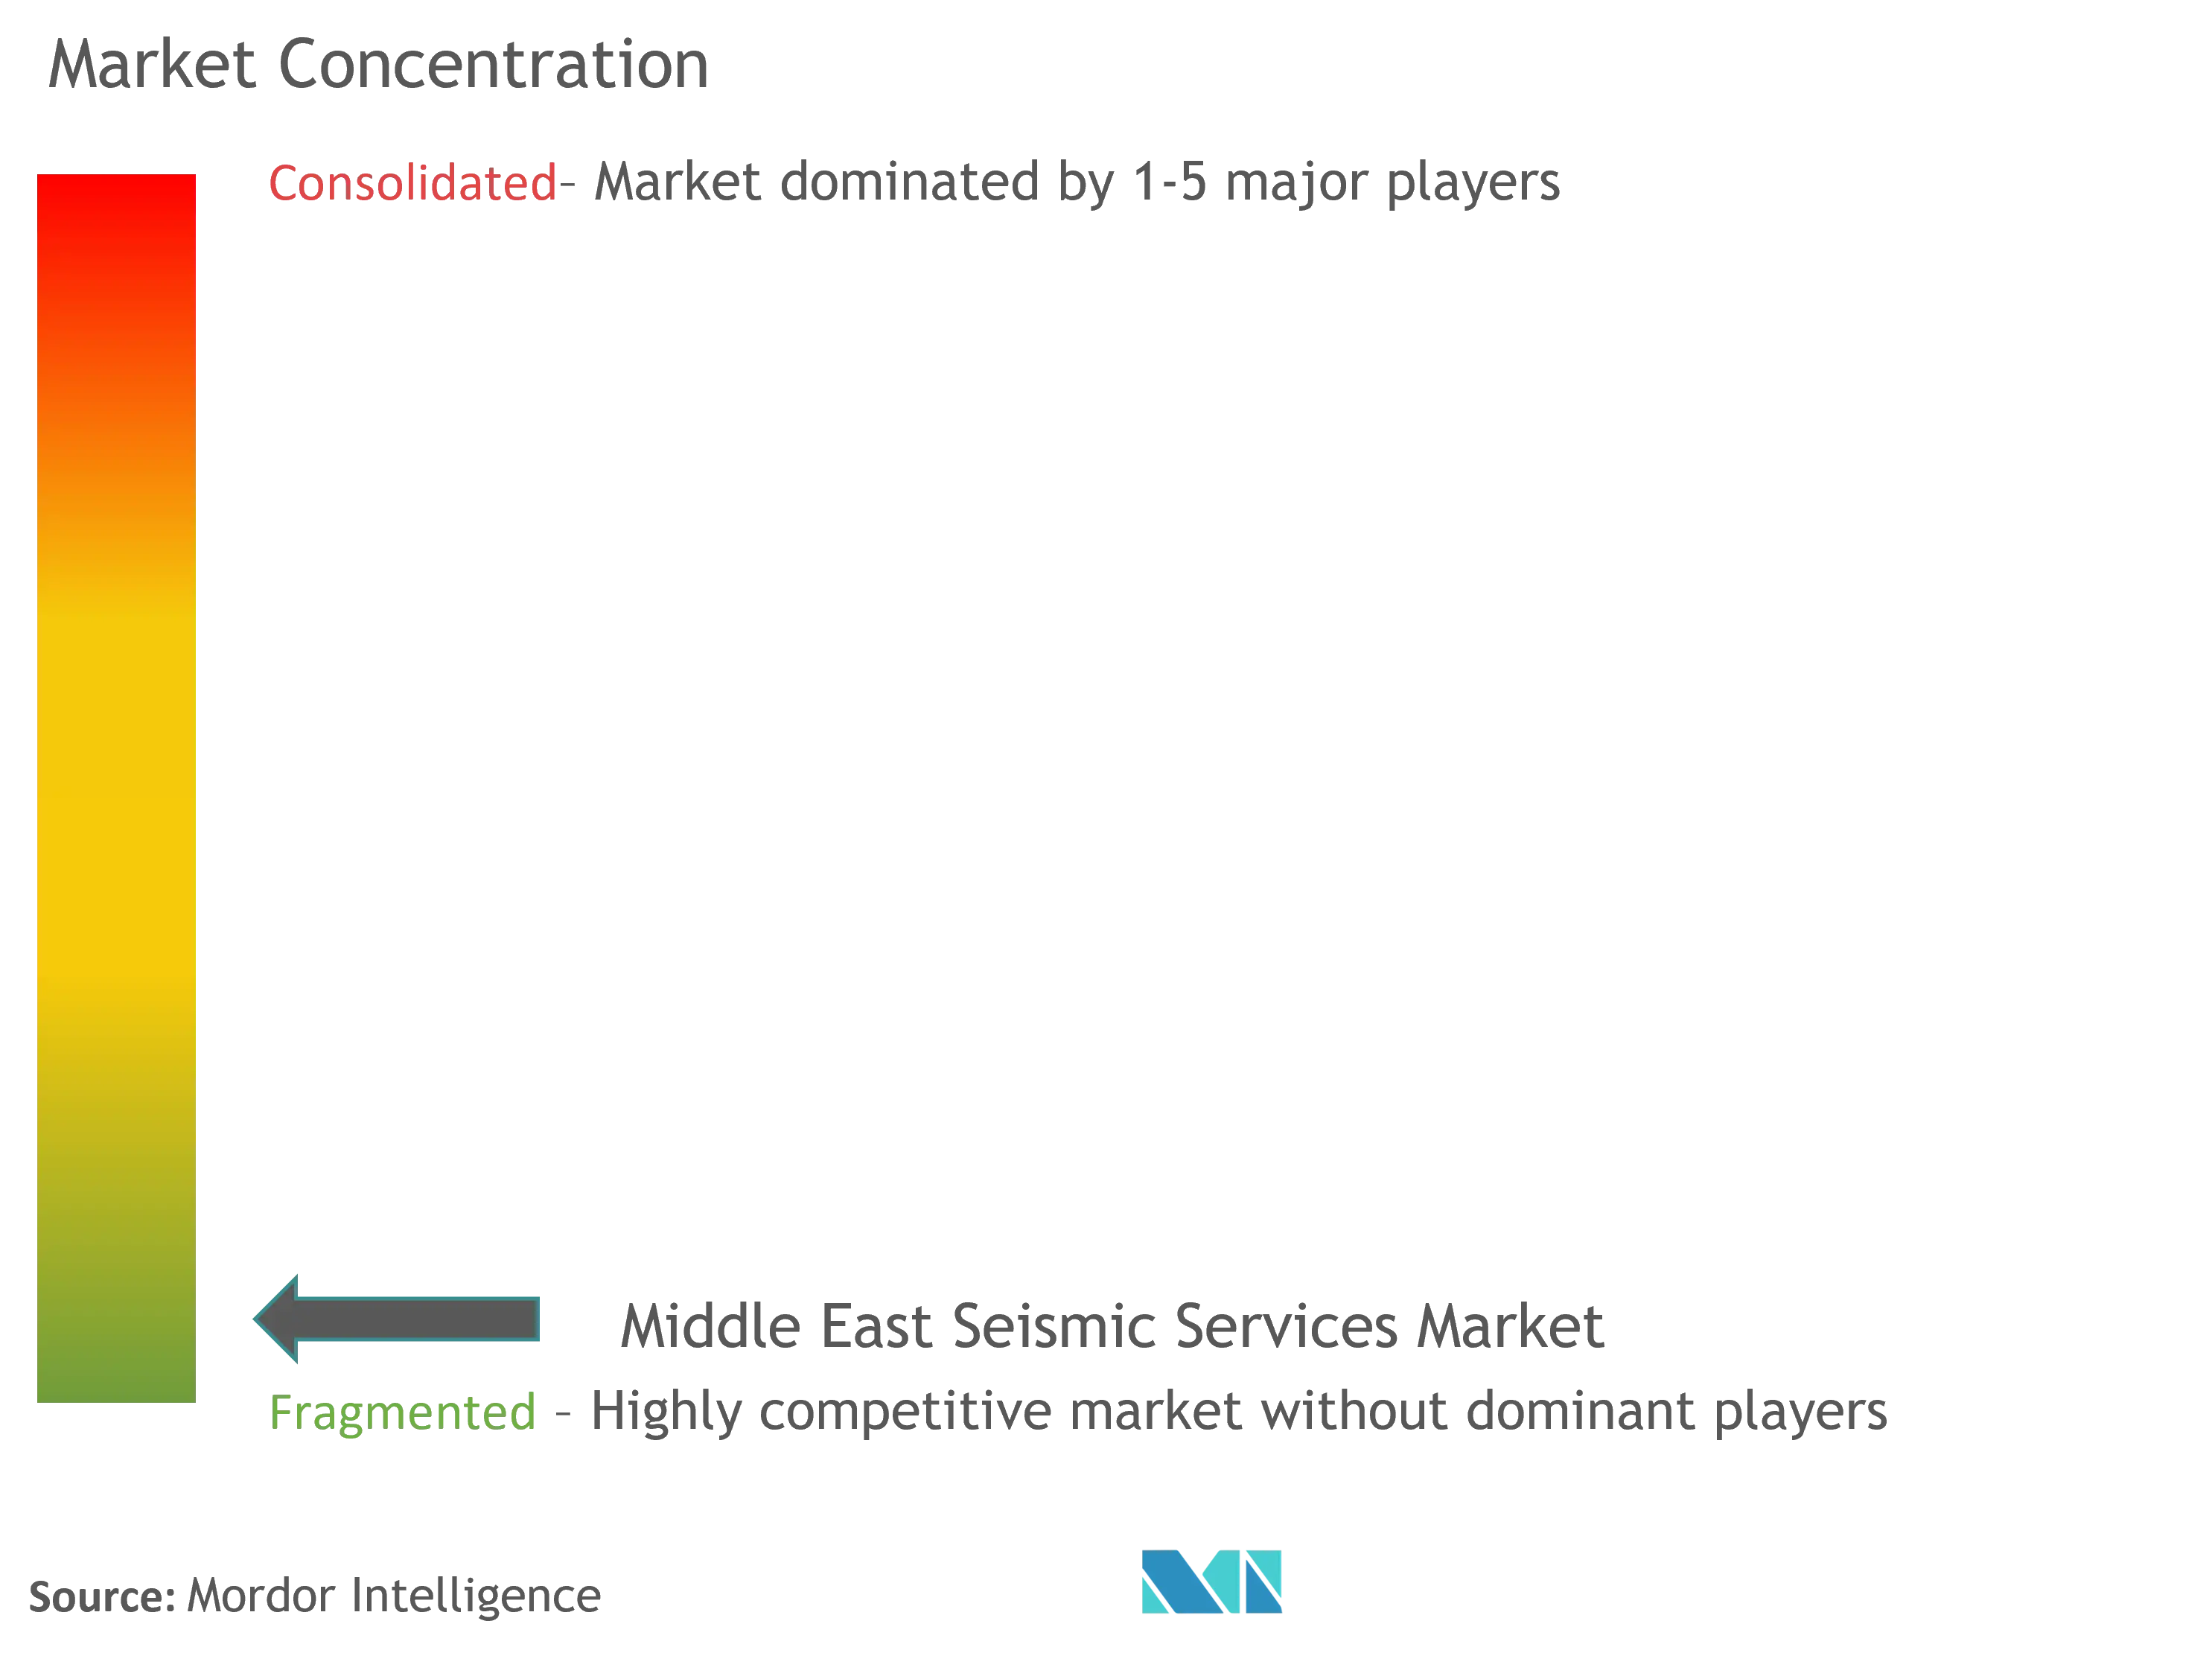 Middle East Seismic Services Market Concentration